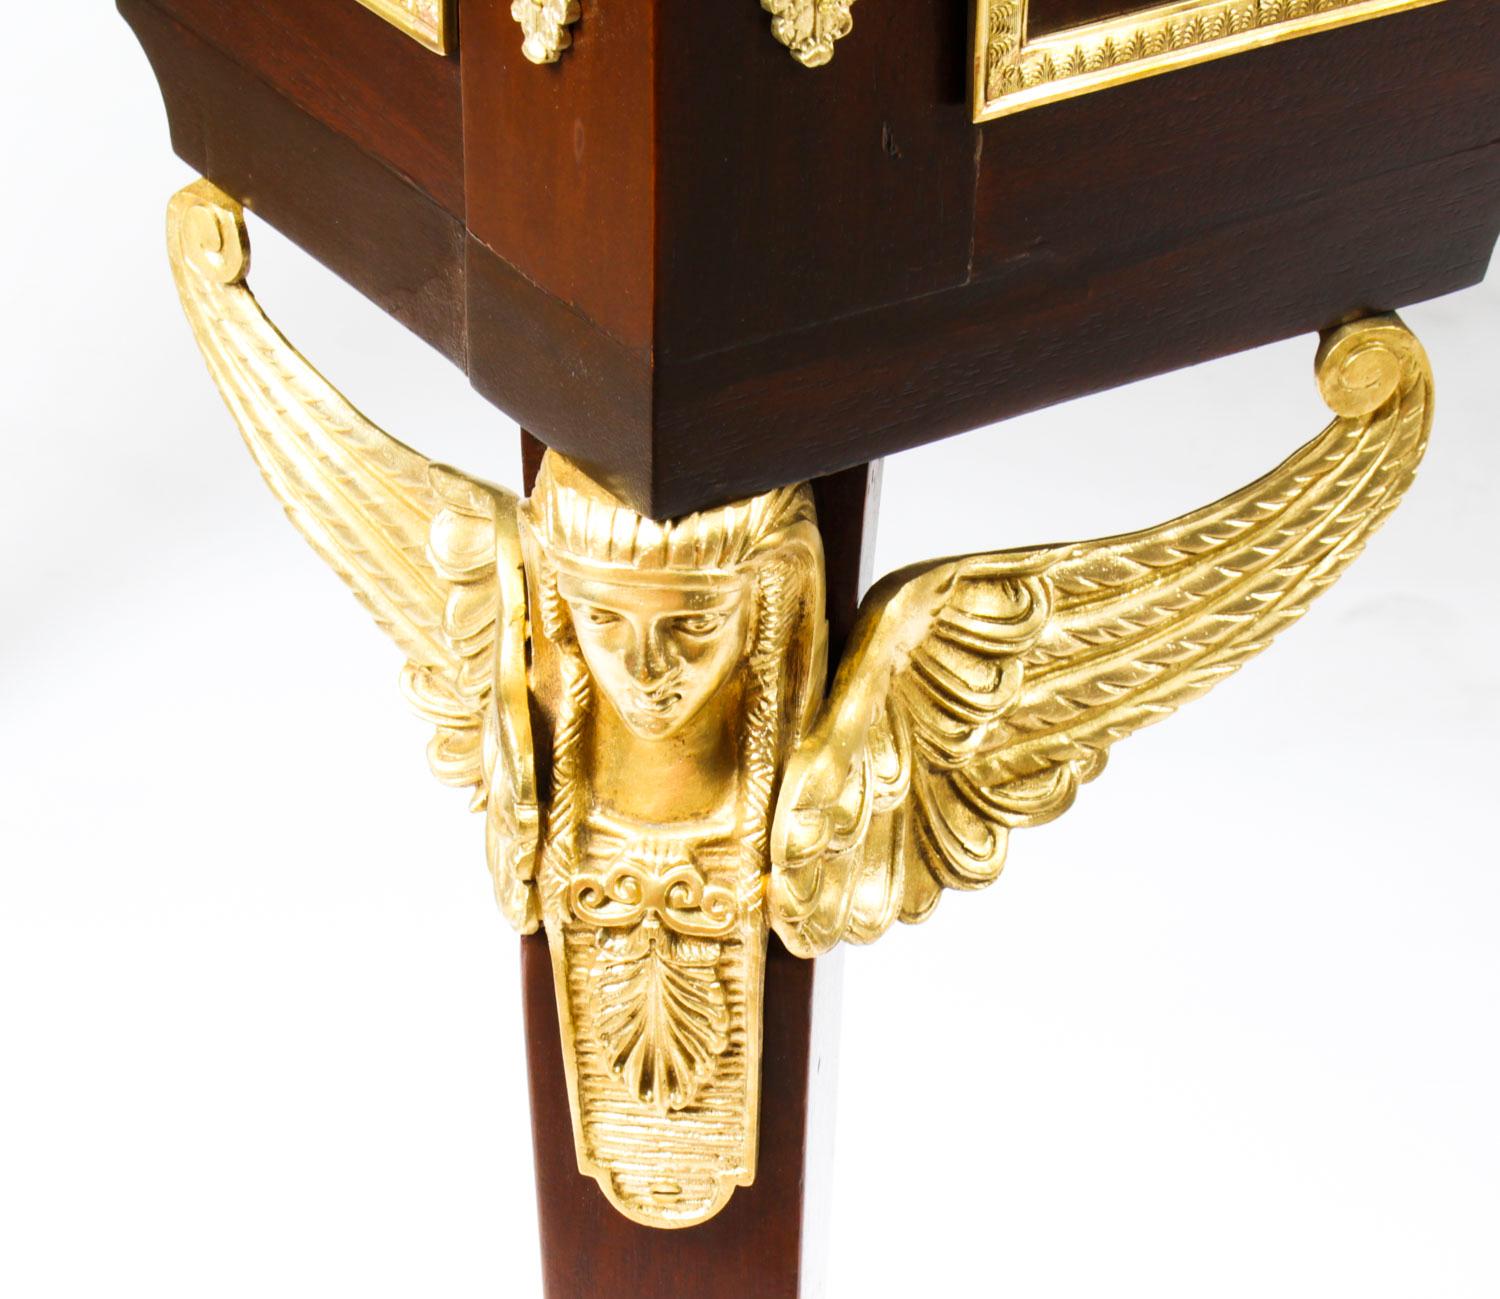 Antique Monumental French Empire Bureau Plat Desk Writing Table, 19th Century For Sale 2